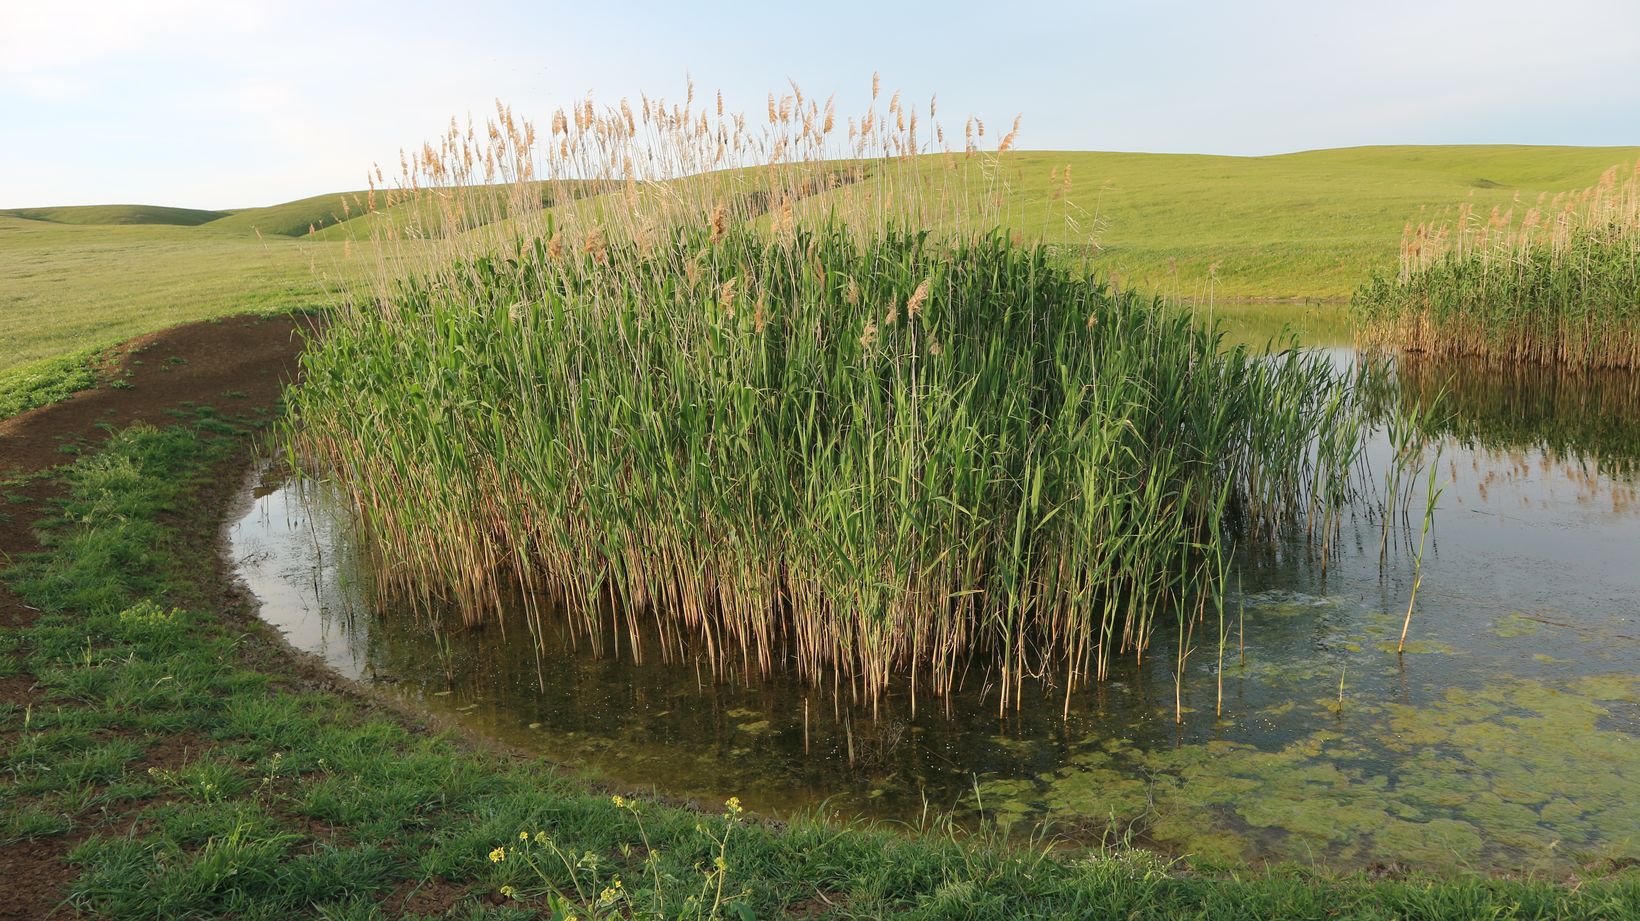 Карабетова сопка, image of landscape/habitat.